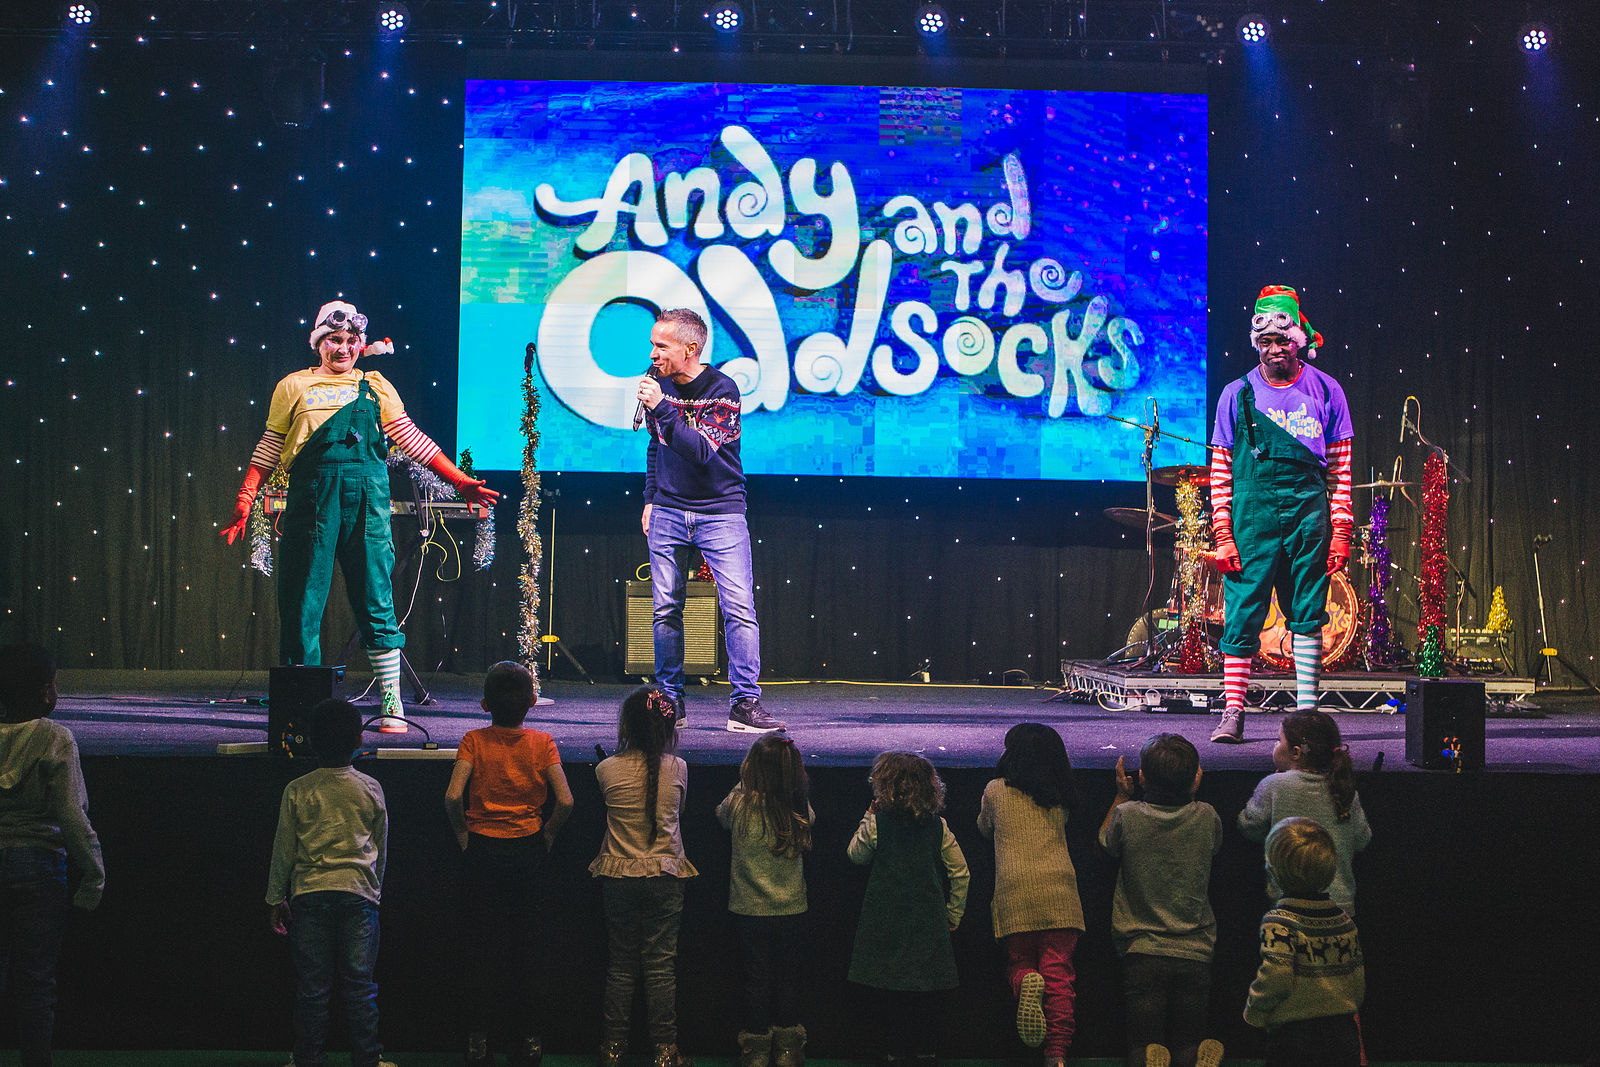 Andy & The Odd Socks